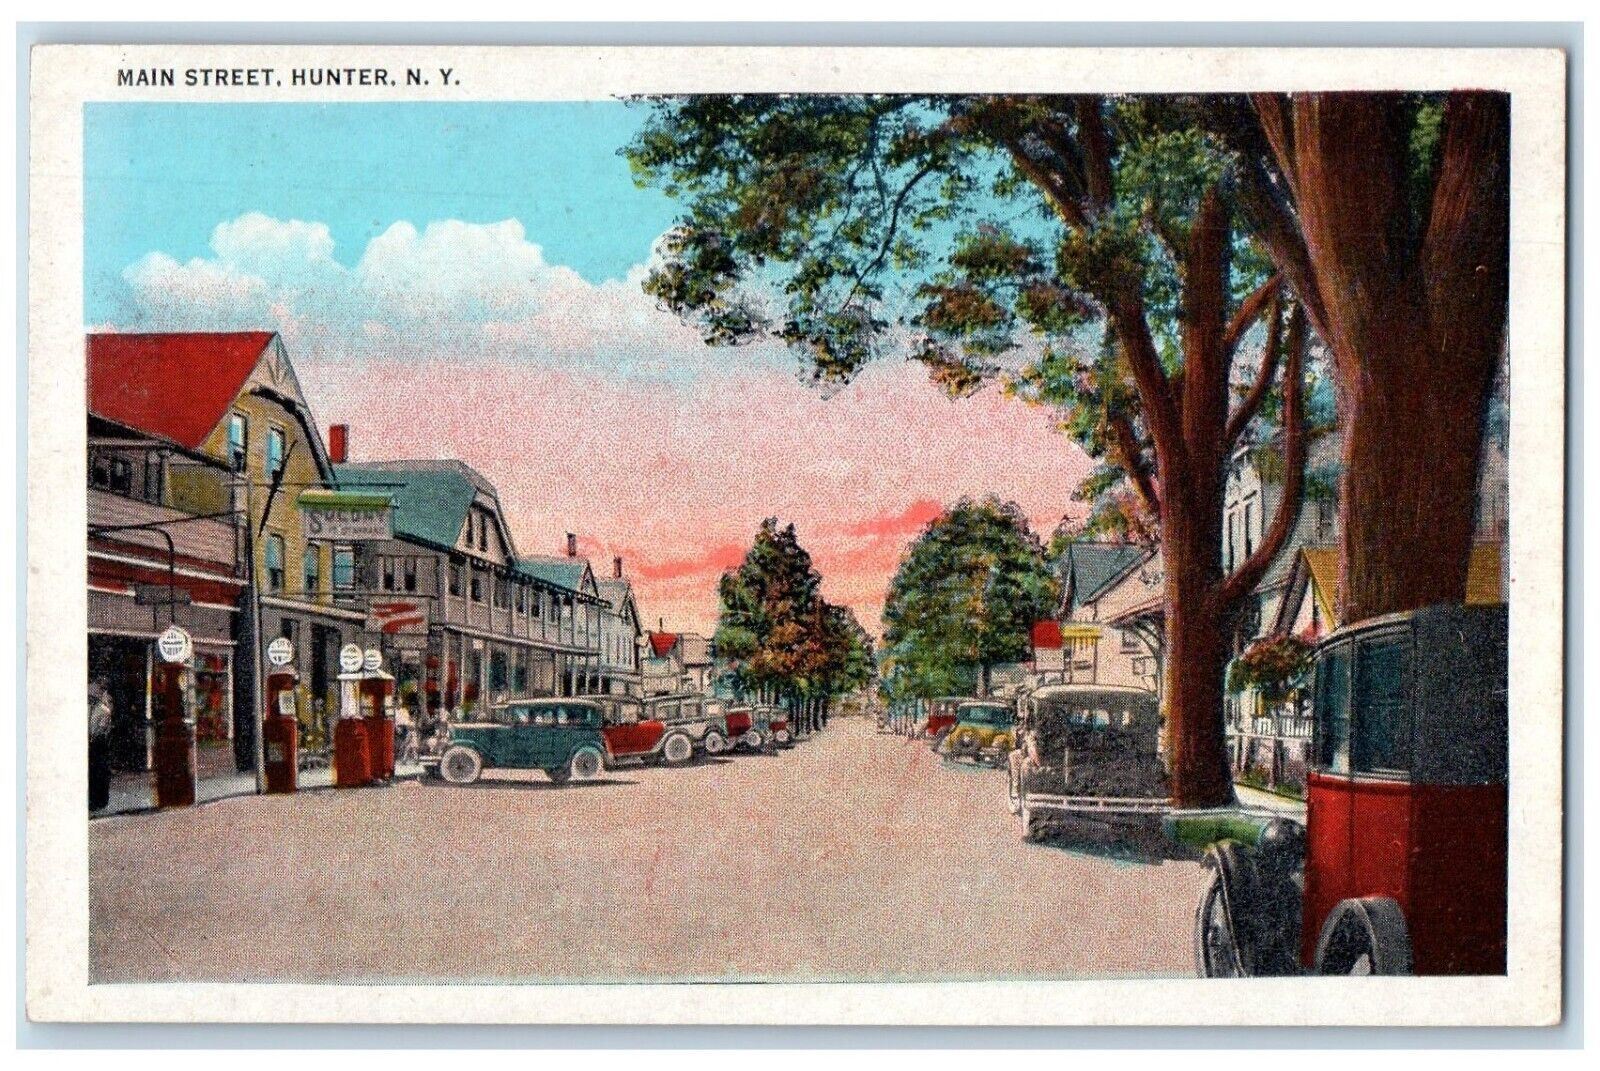 c1920's Main Street View Cars Sucony Store Hunter New York NY Vintage Postcard